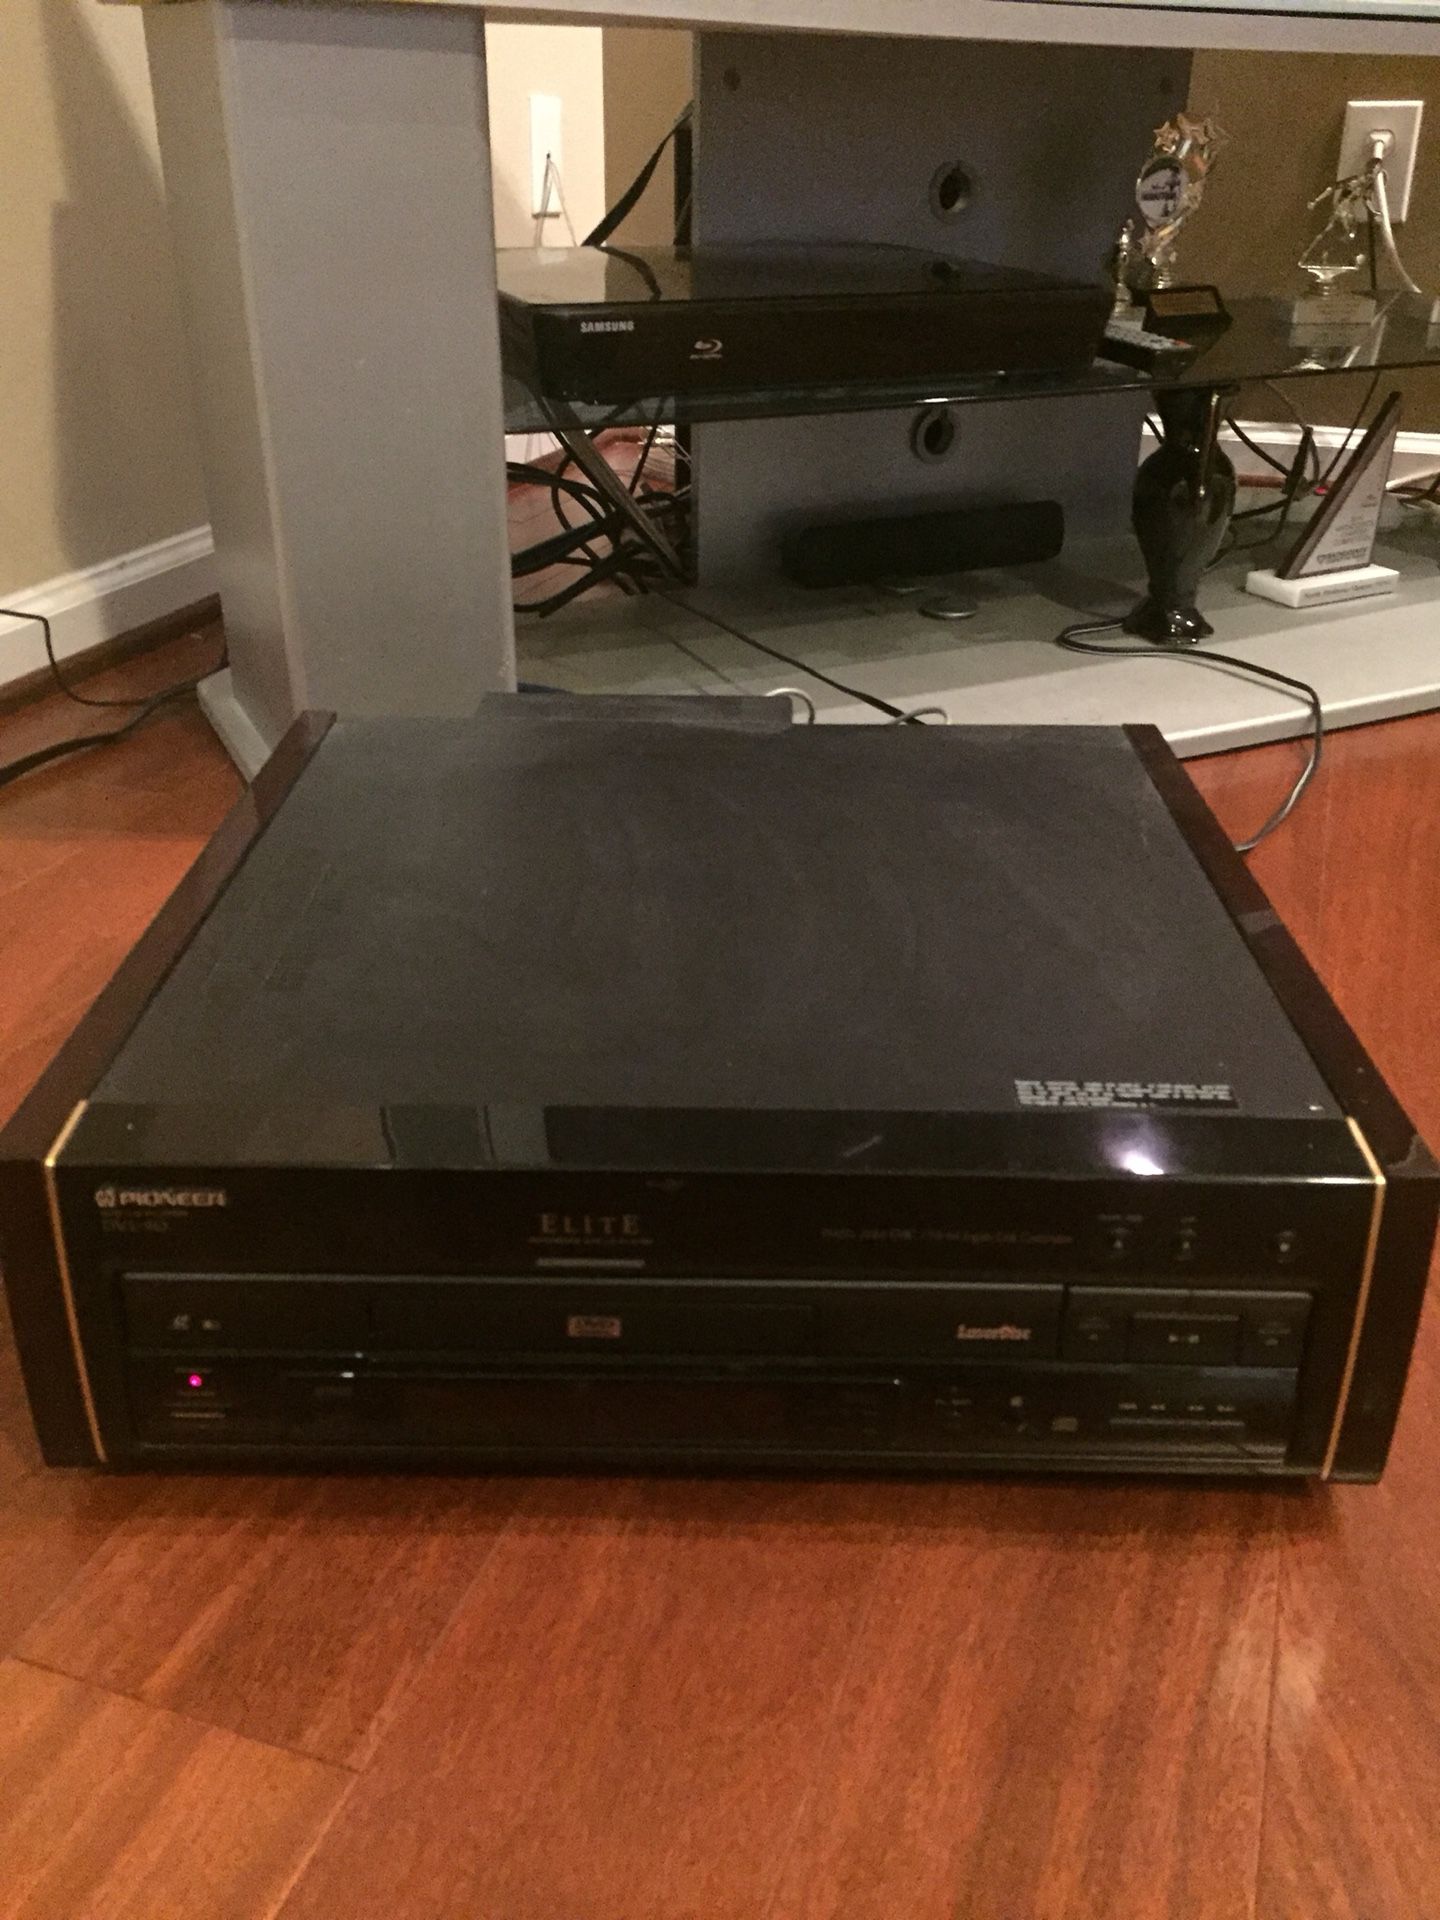 Pioneer dvl 90 elite laserdisc/ DVD player with more than 120 laserdisc movies